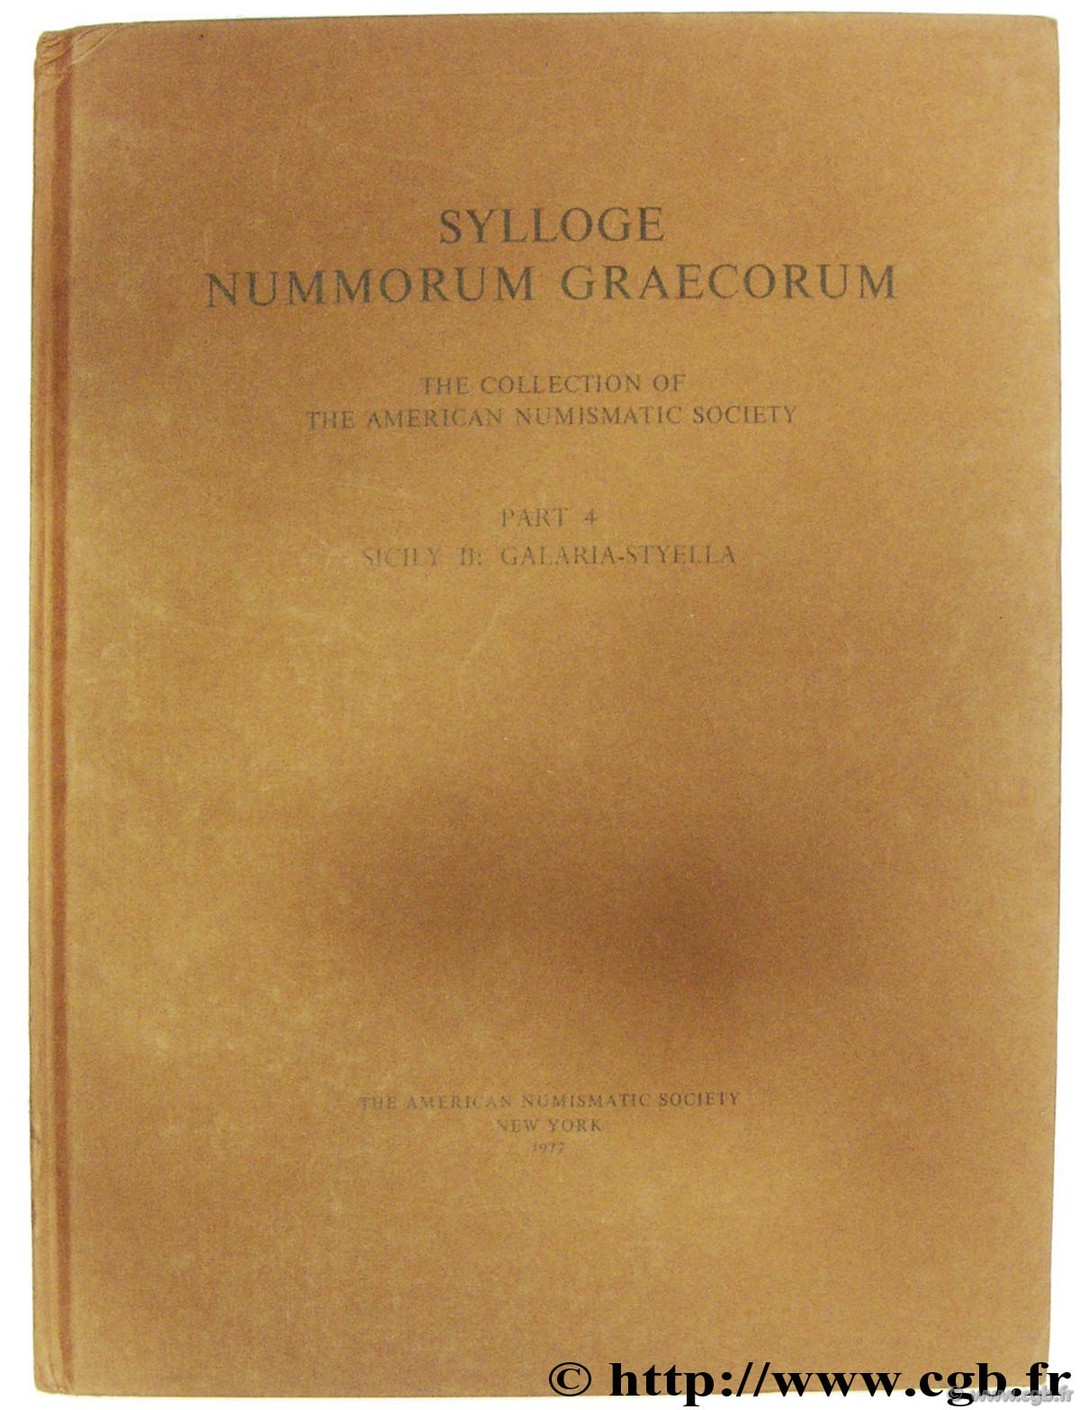 Sylloge Nummorum Graecorum The Collection of the American Numismatic Society 